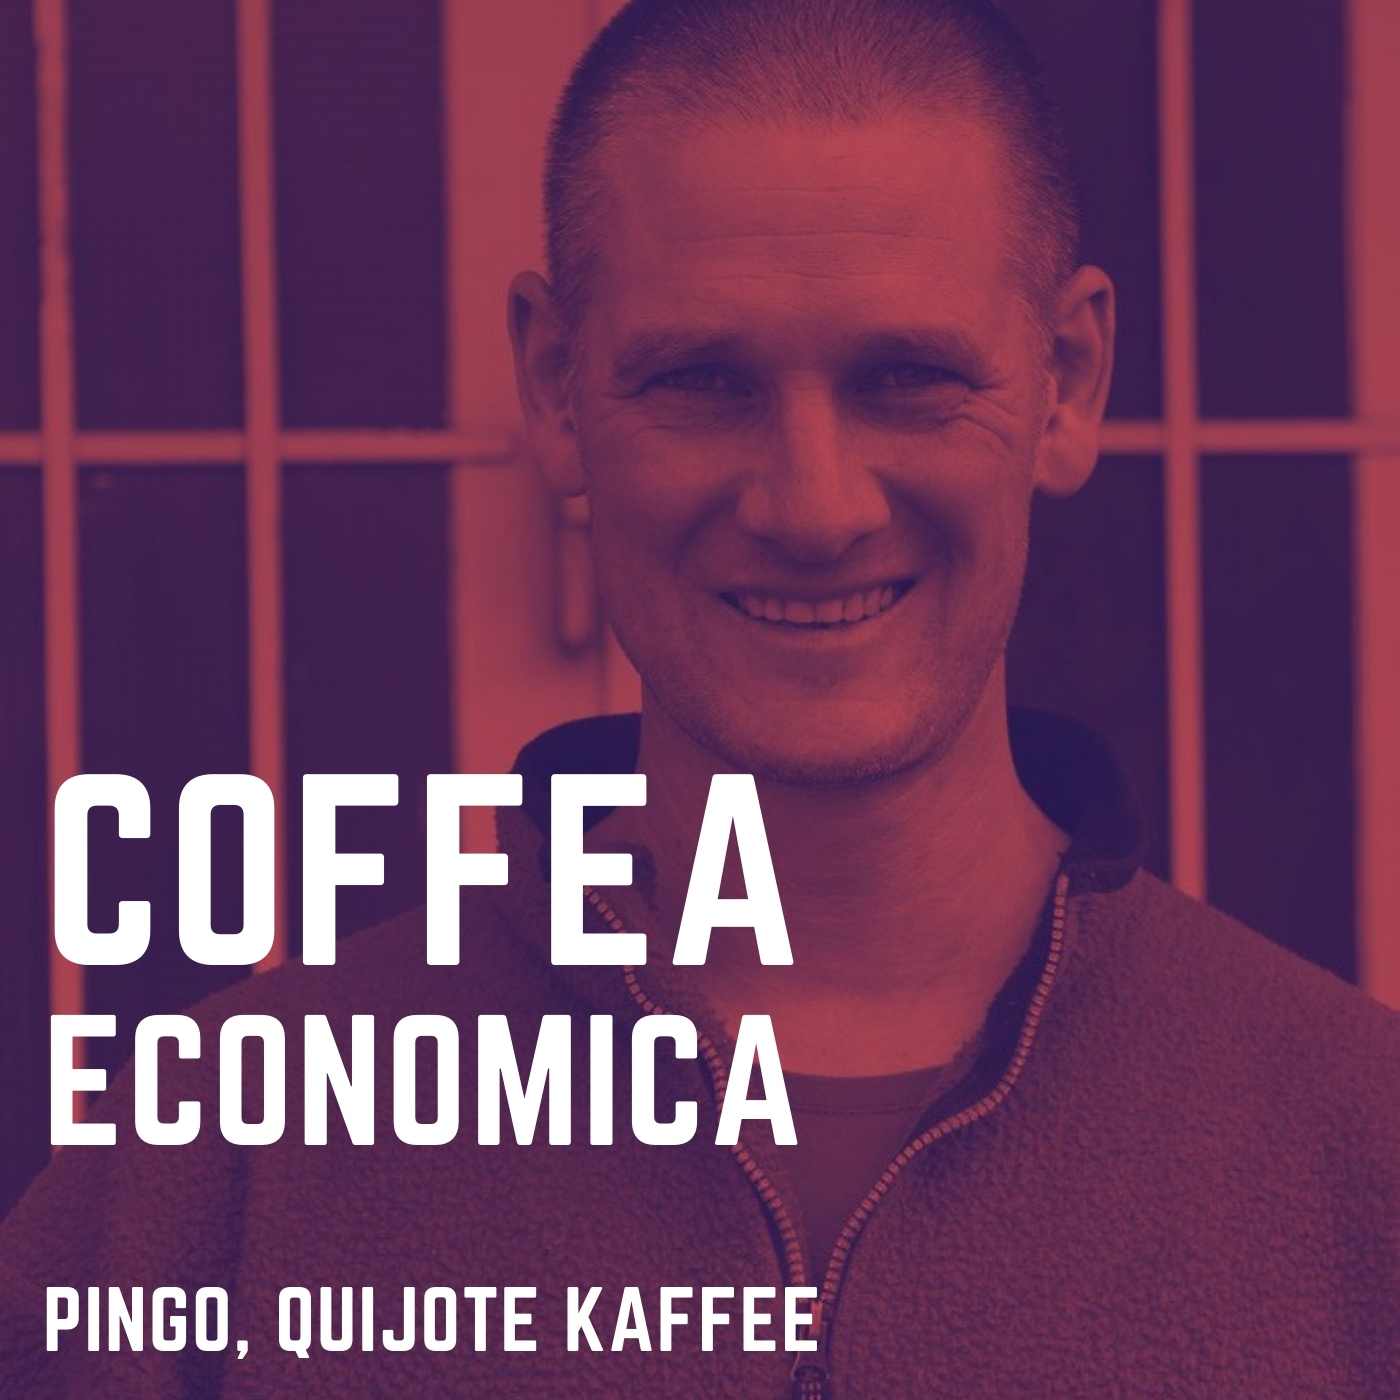 Coffea Economica: Andreas Pingo Felsen, Quijote Kaffee